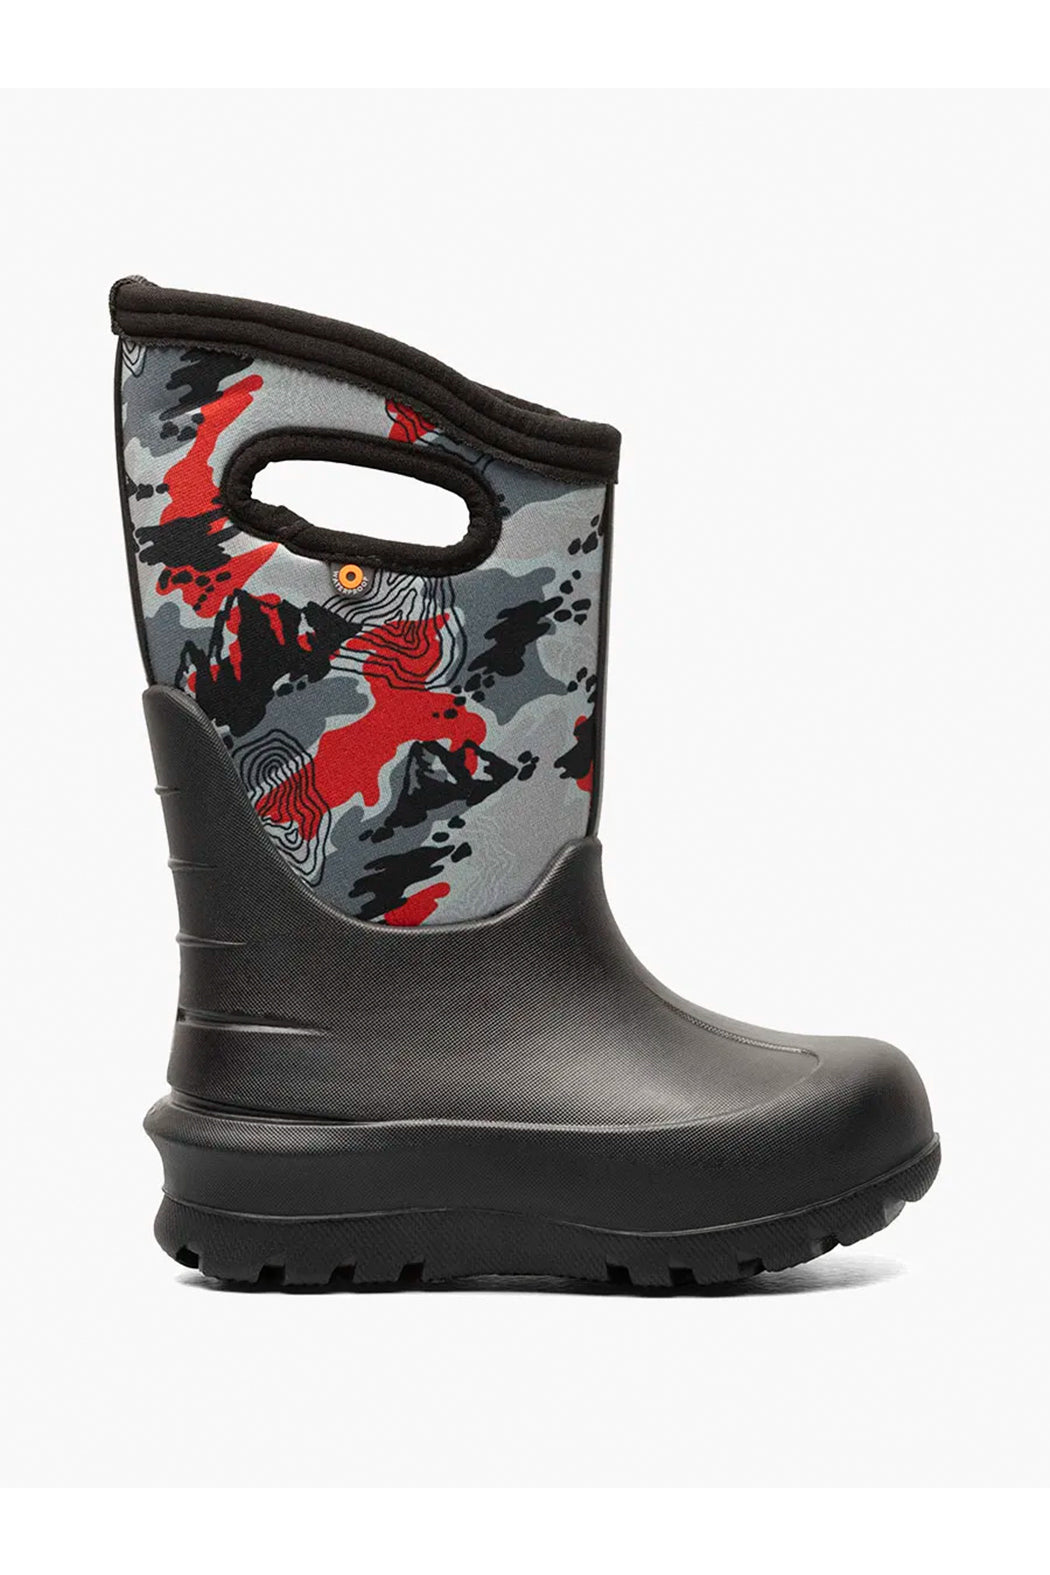 BOGS Neo-Classic Topo Camo Waterproof Winter Boot